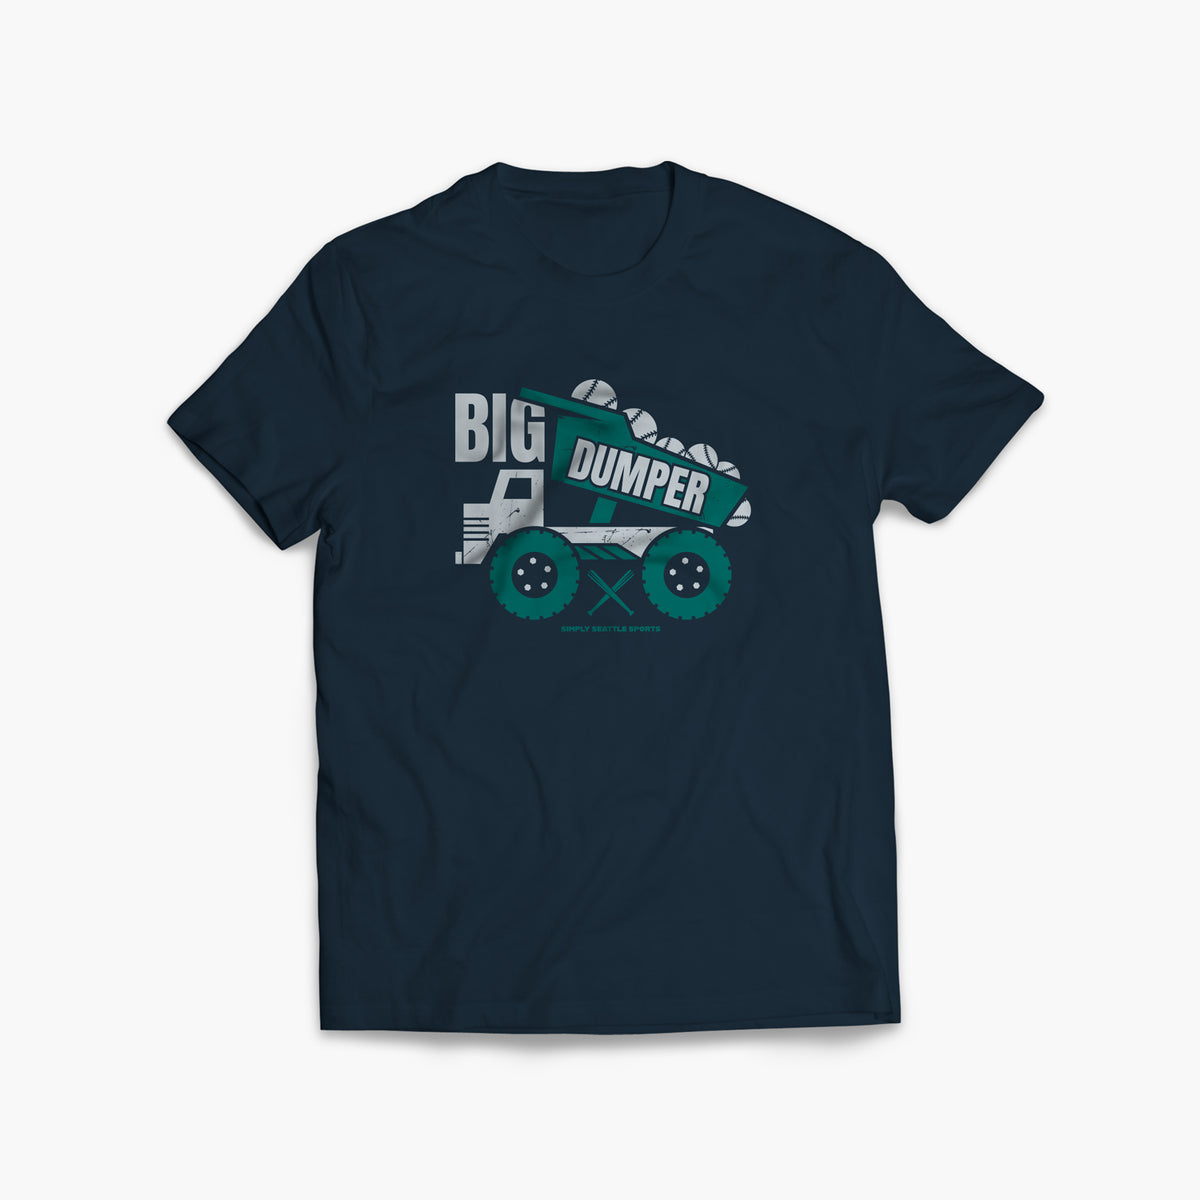 Seattle Mariners Big Dumper Shirt